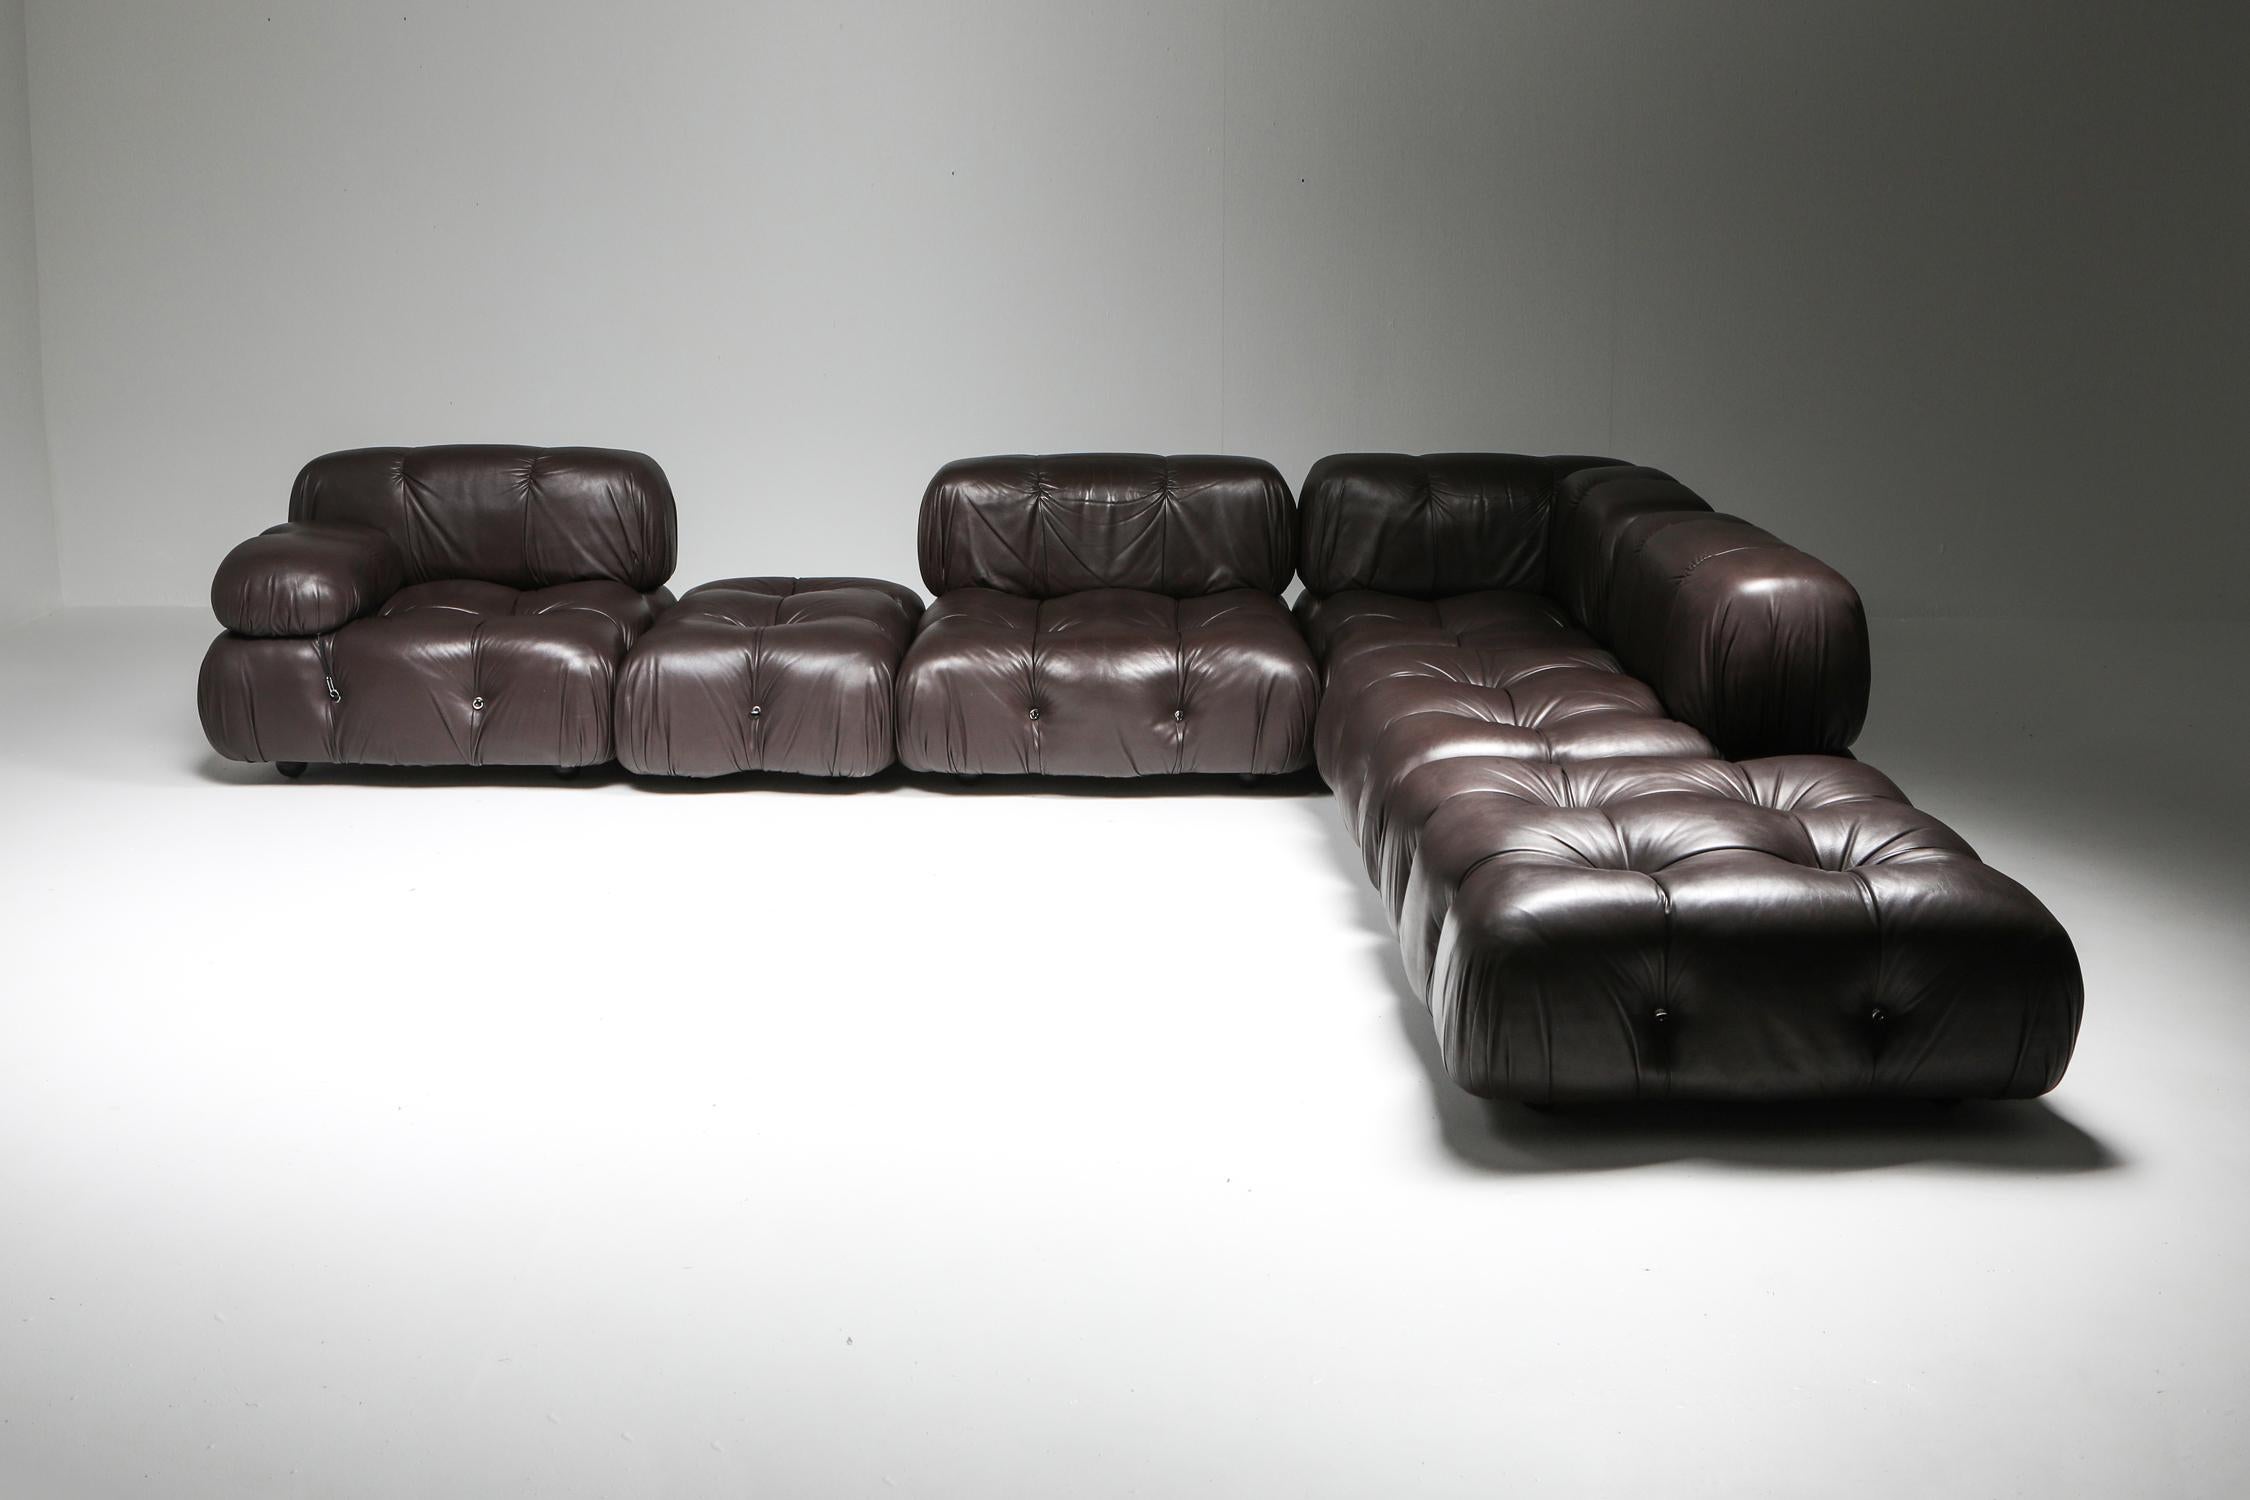 Stainless Steel Mario Bellini's Camaleonda Original Sectional Sofa in Chocolate Brown Leather